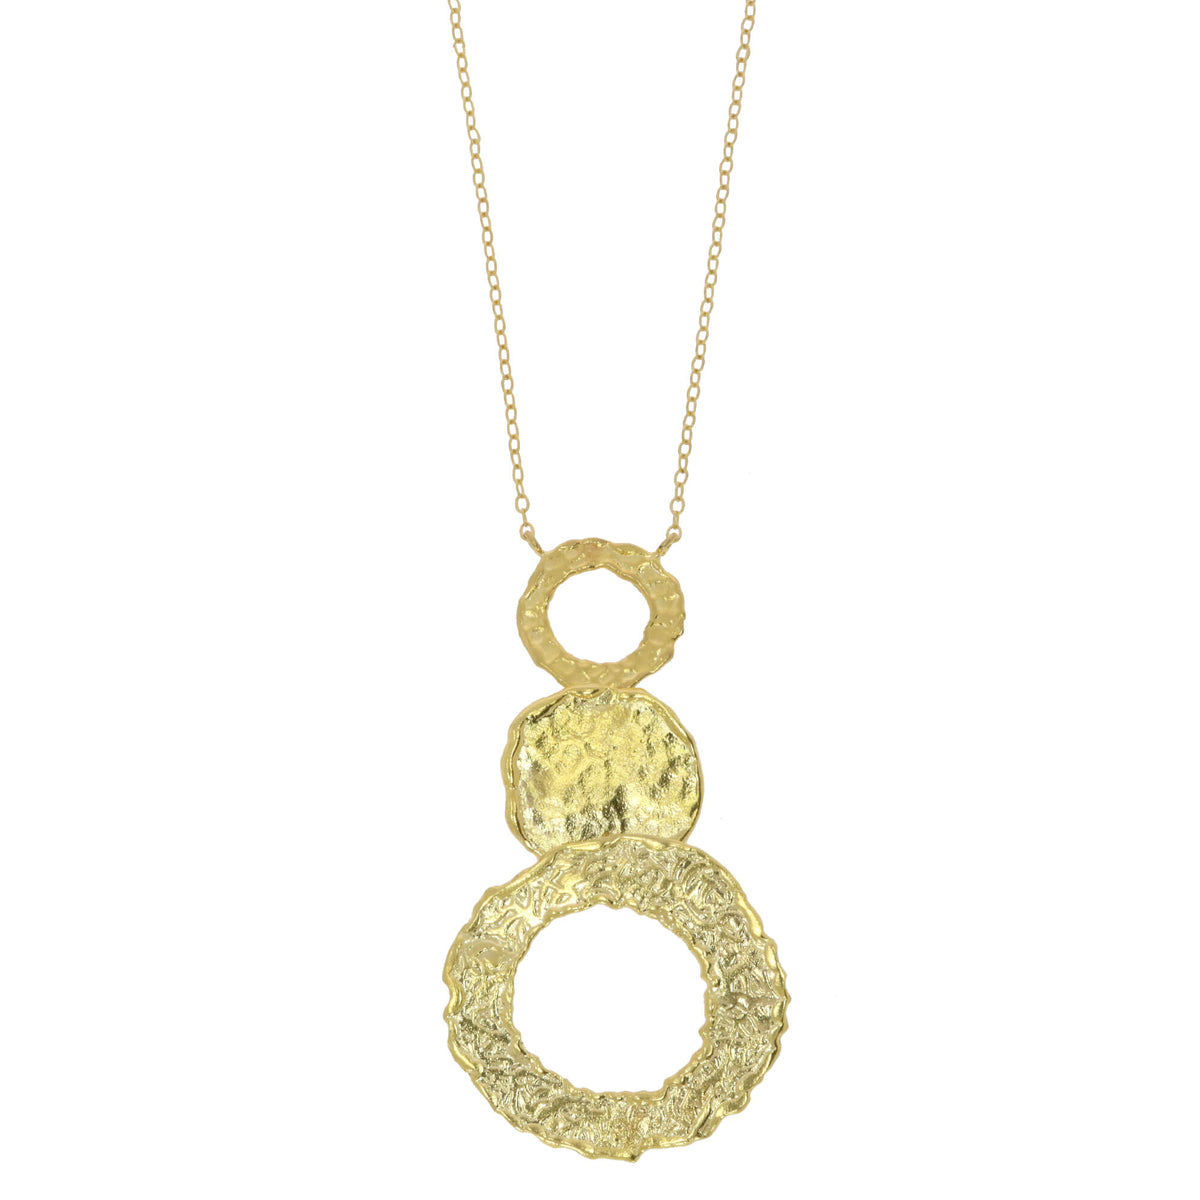 OTTOMAN DI14 Circles necklace in gold